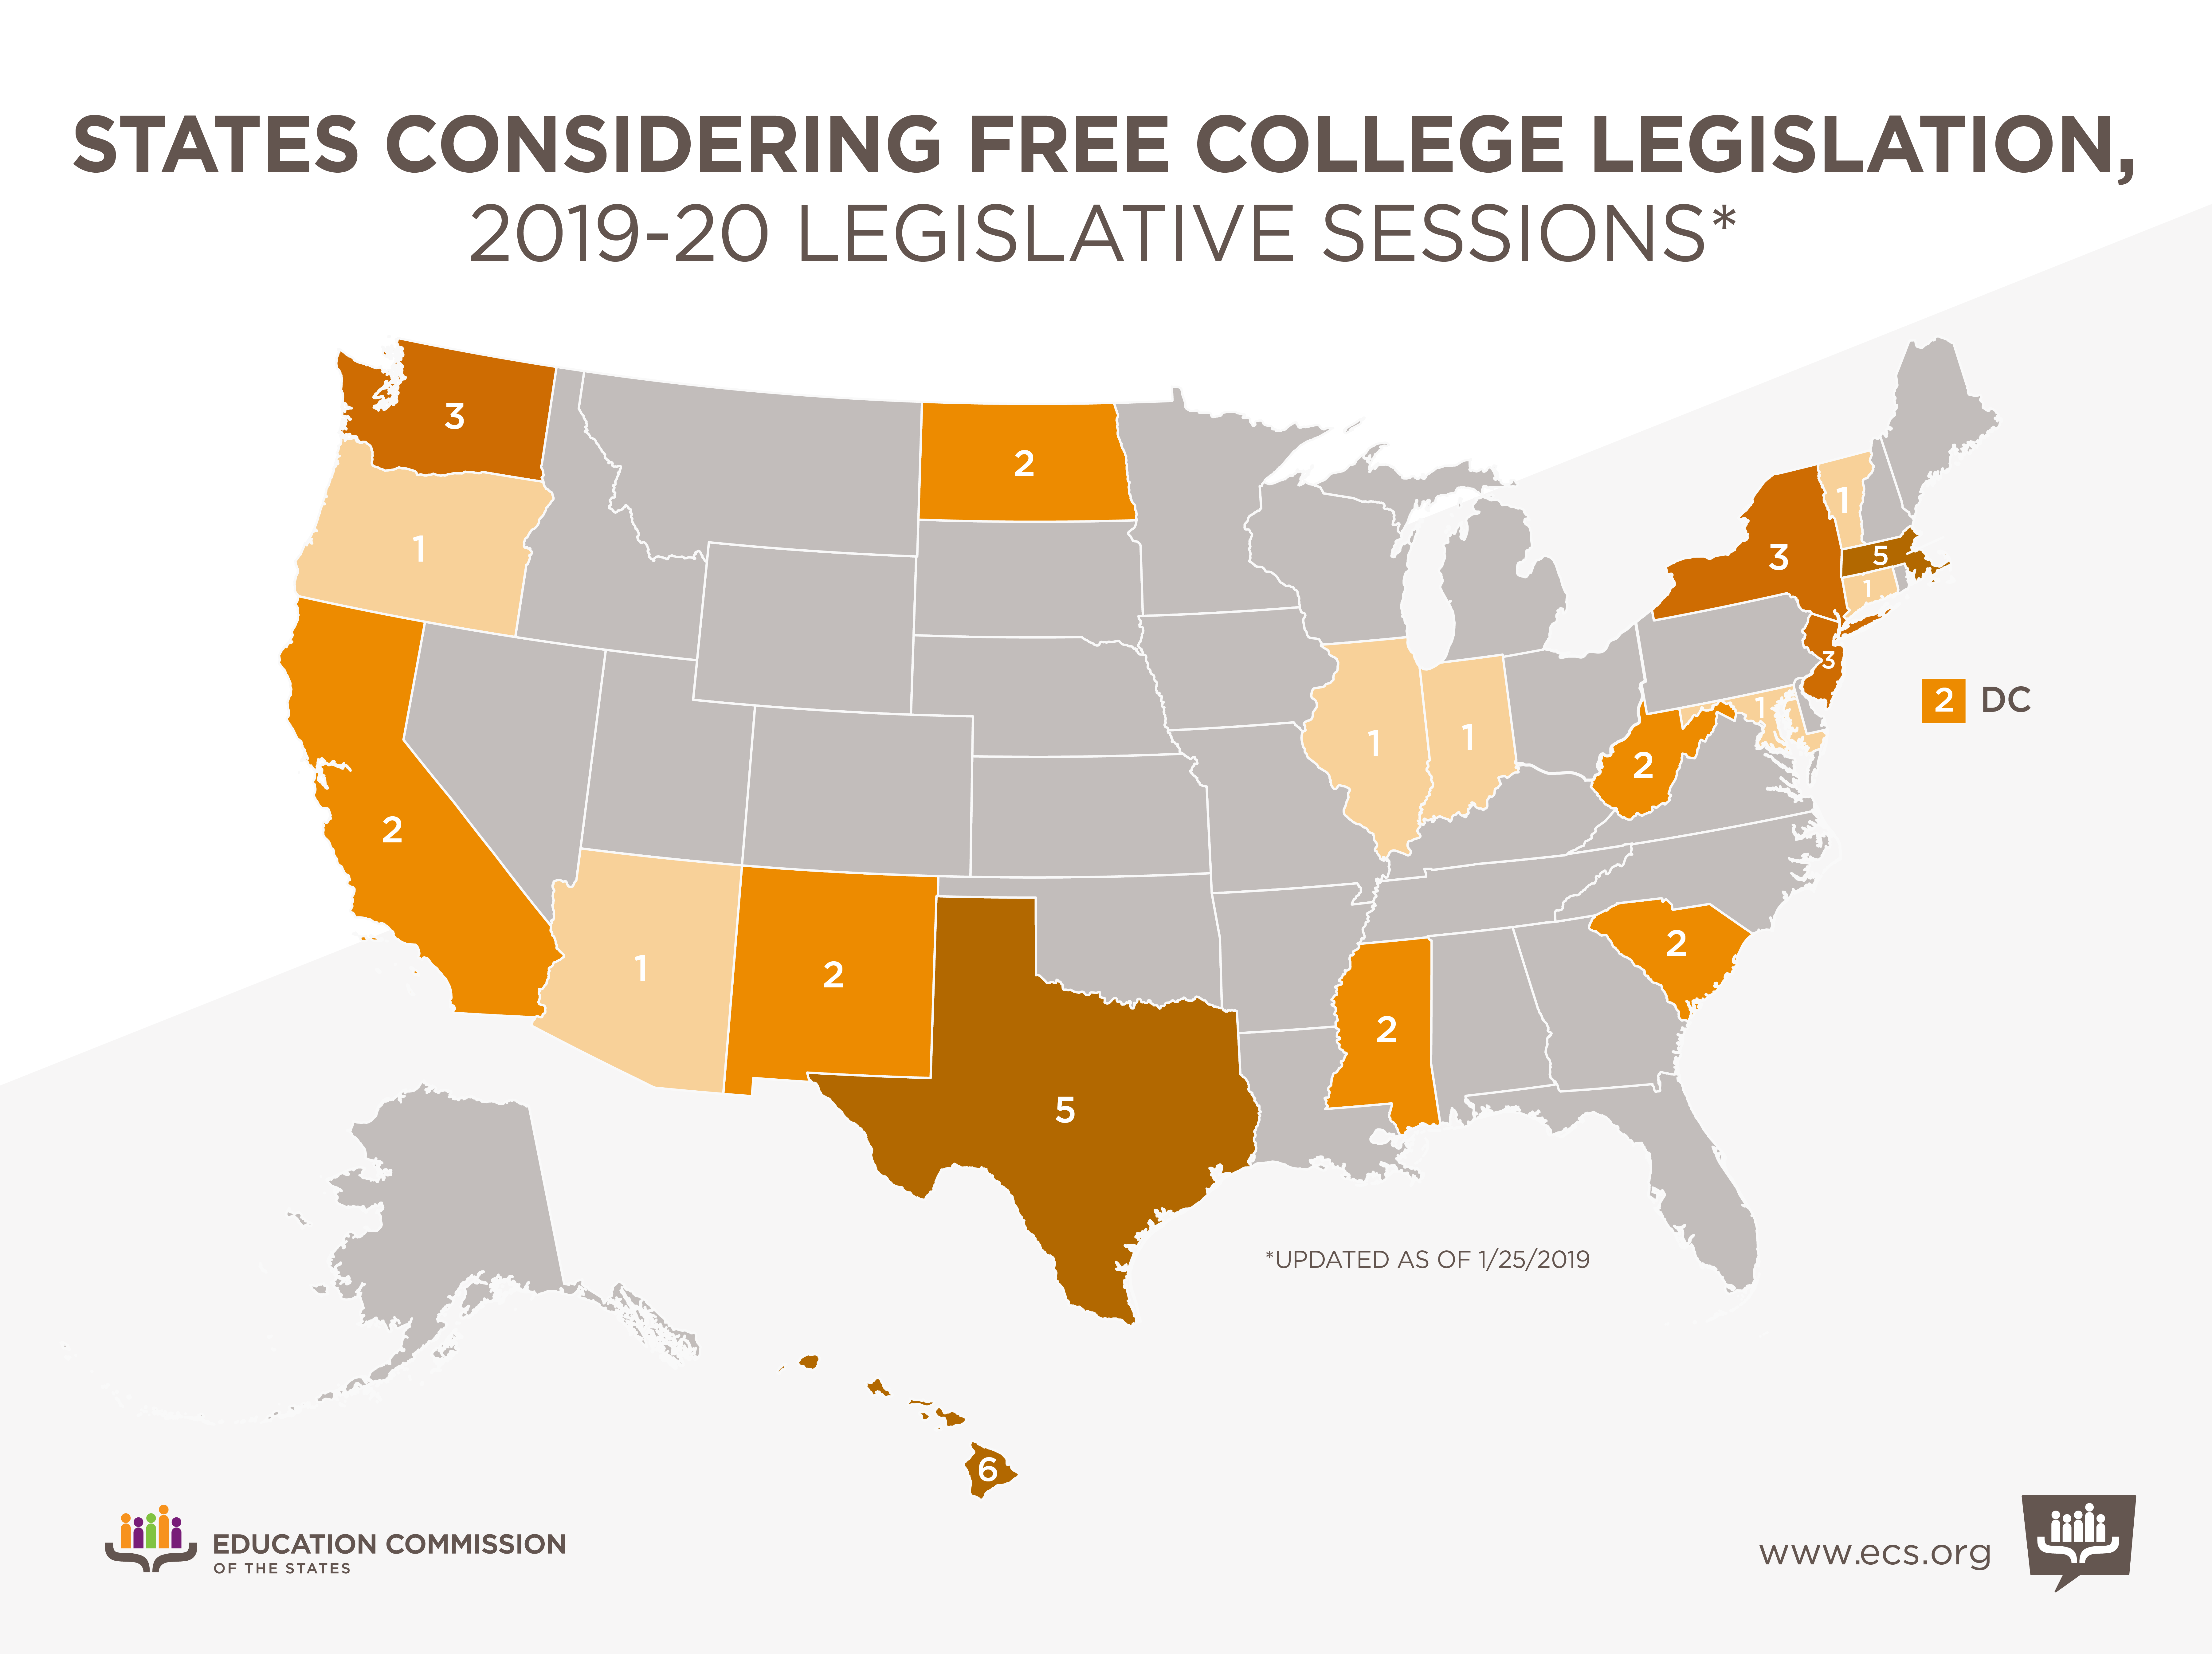 States Considering Free College Legislation in 2019-20 Legislative Sessions